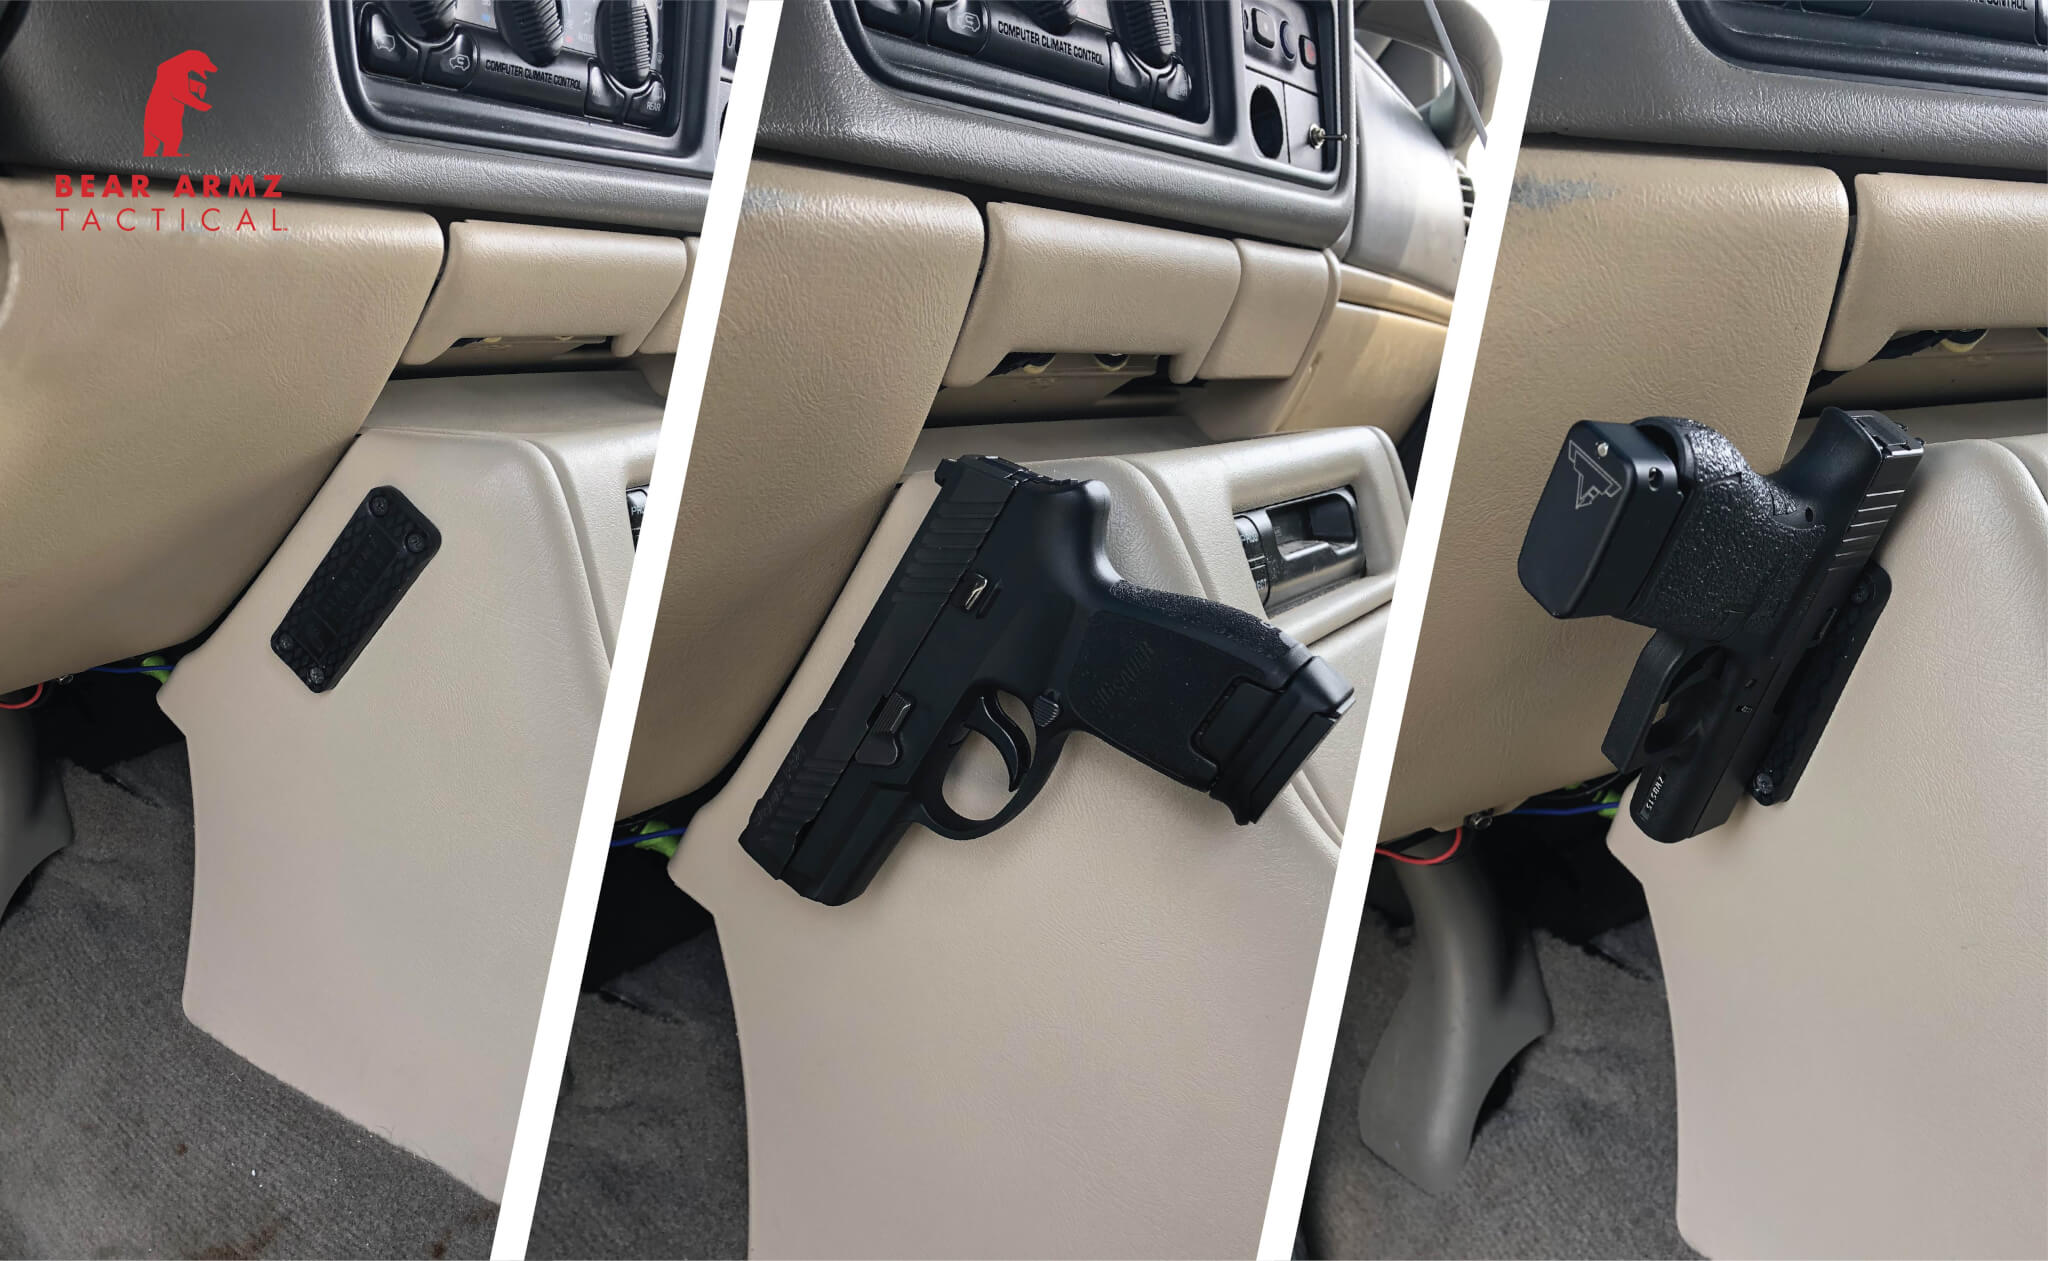 2 Gun Magnet Mount Holder Pistol Rifle Concealed Magnetic Holster Car Home 43lbs 